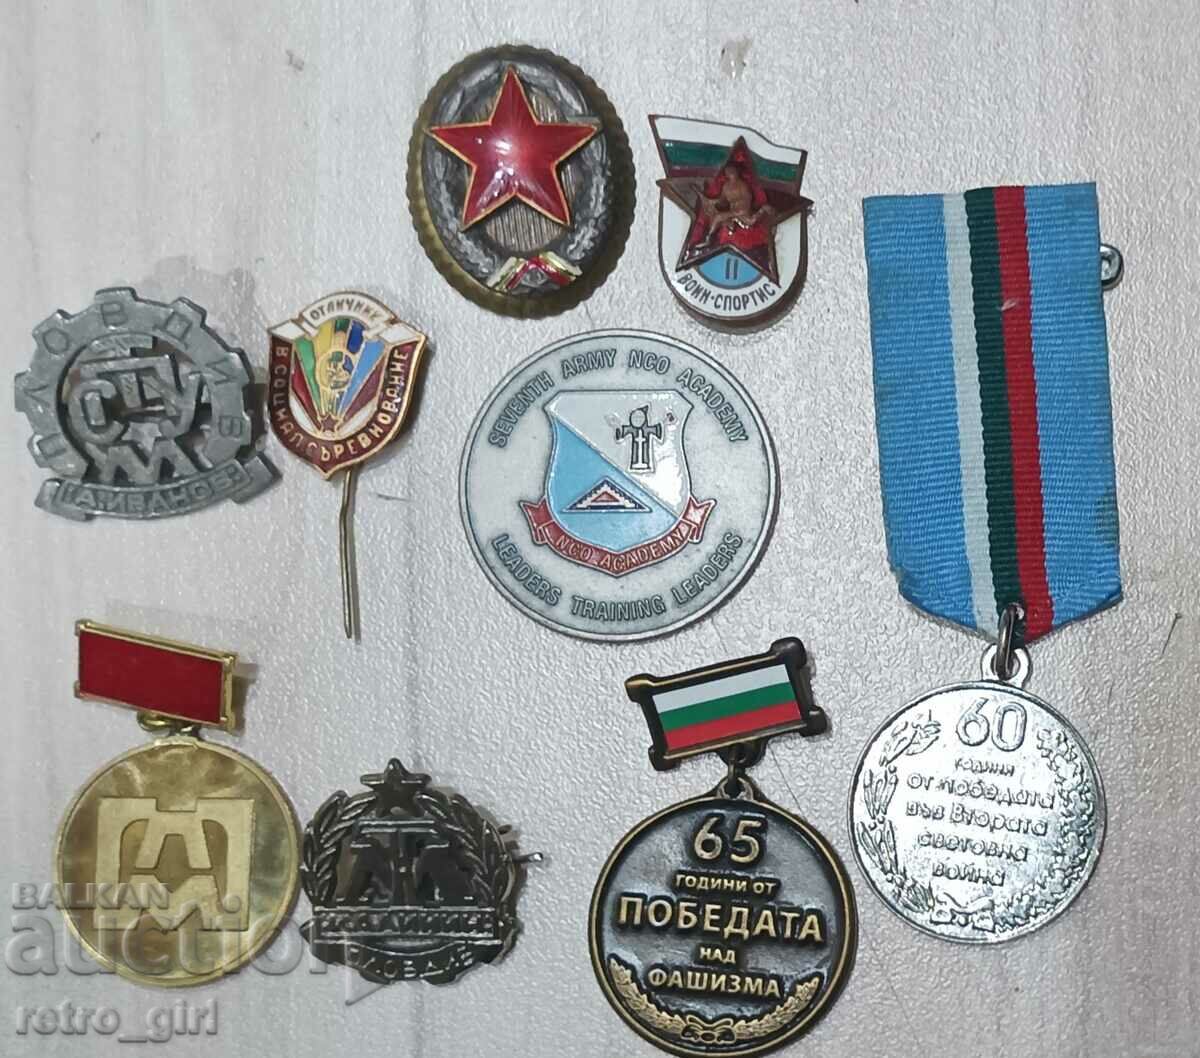 Set de medalii, însemne și insigne.